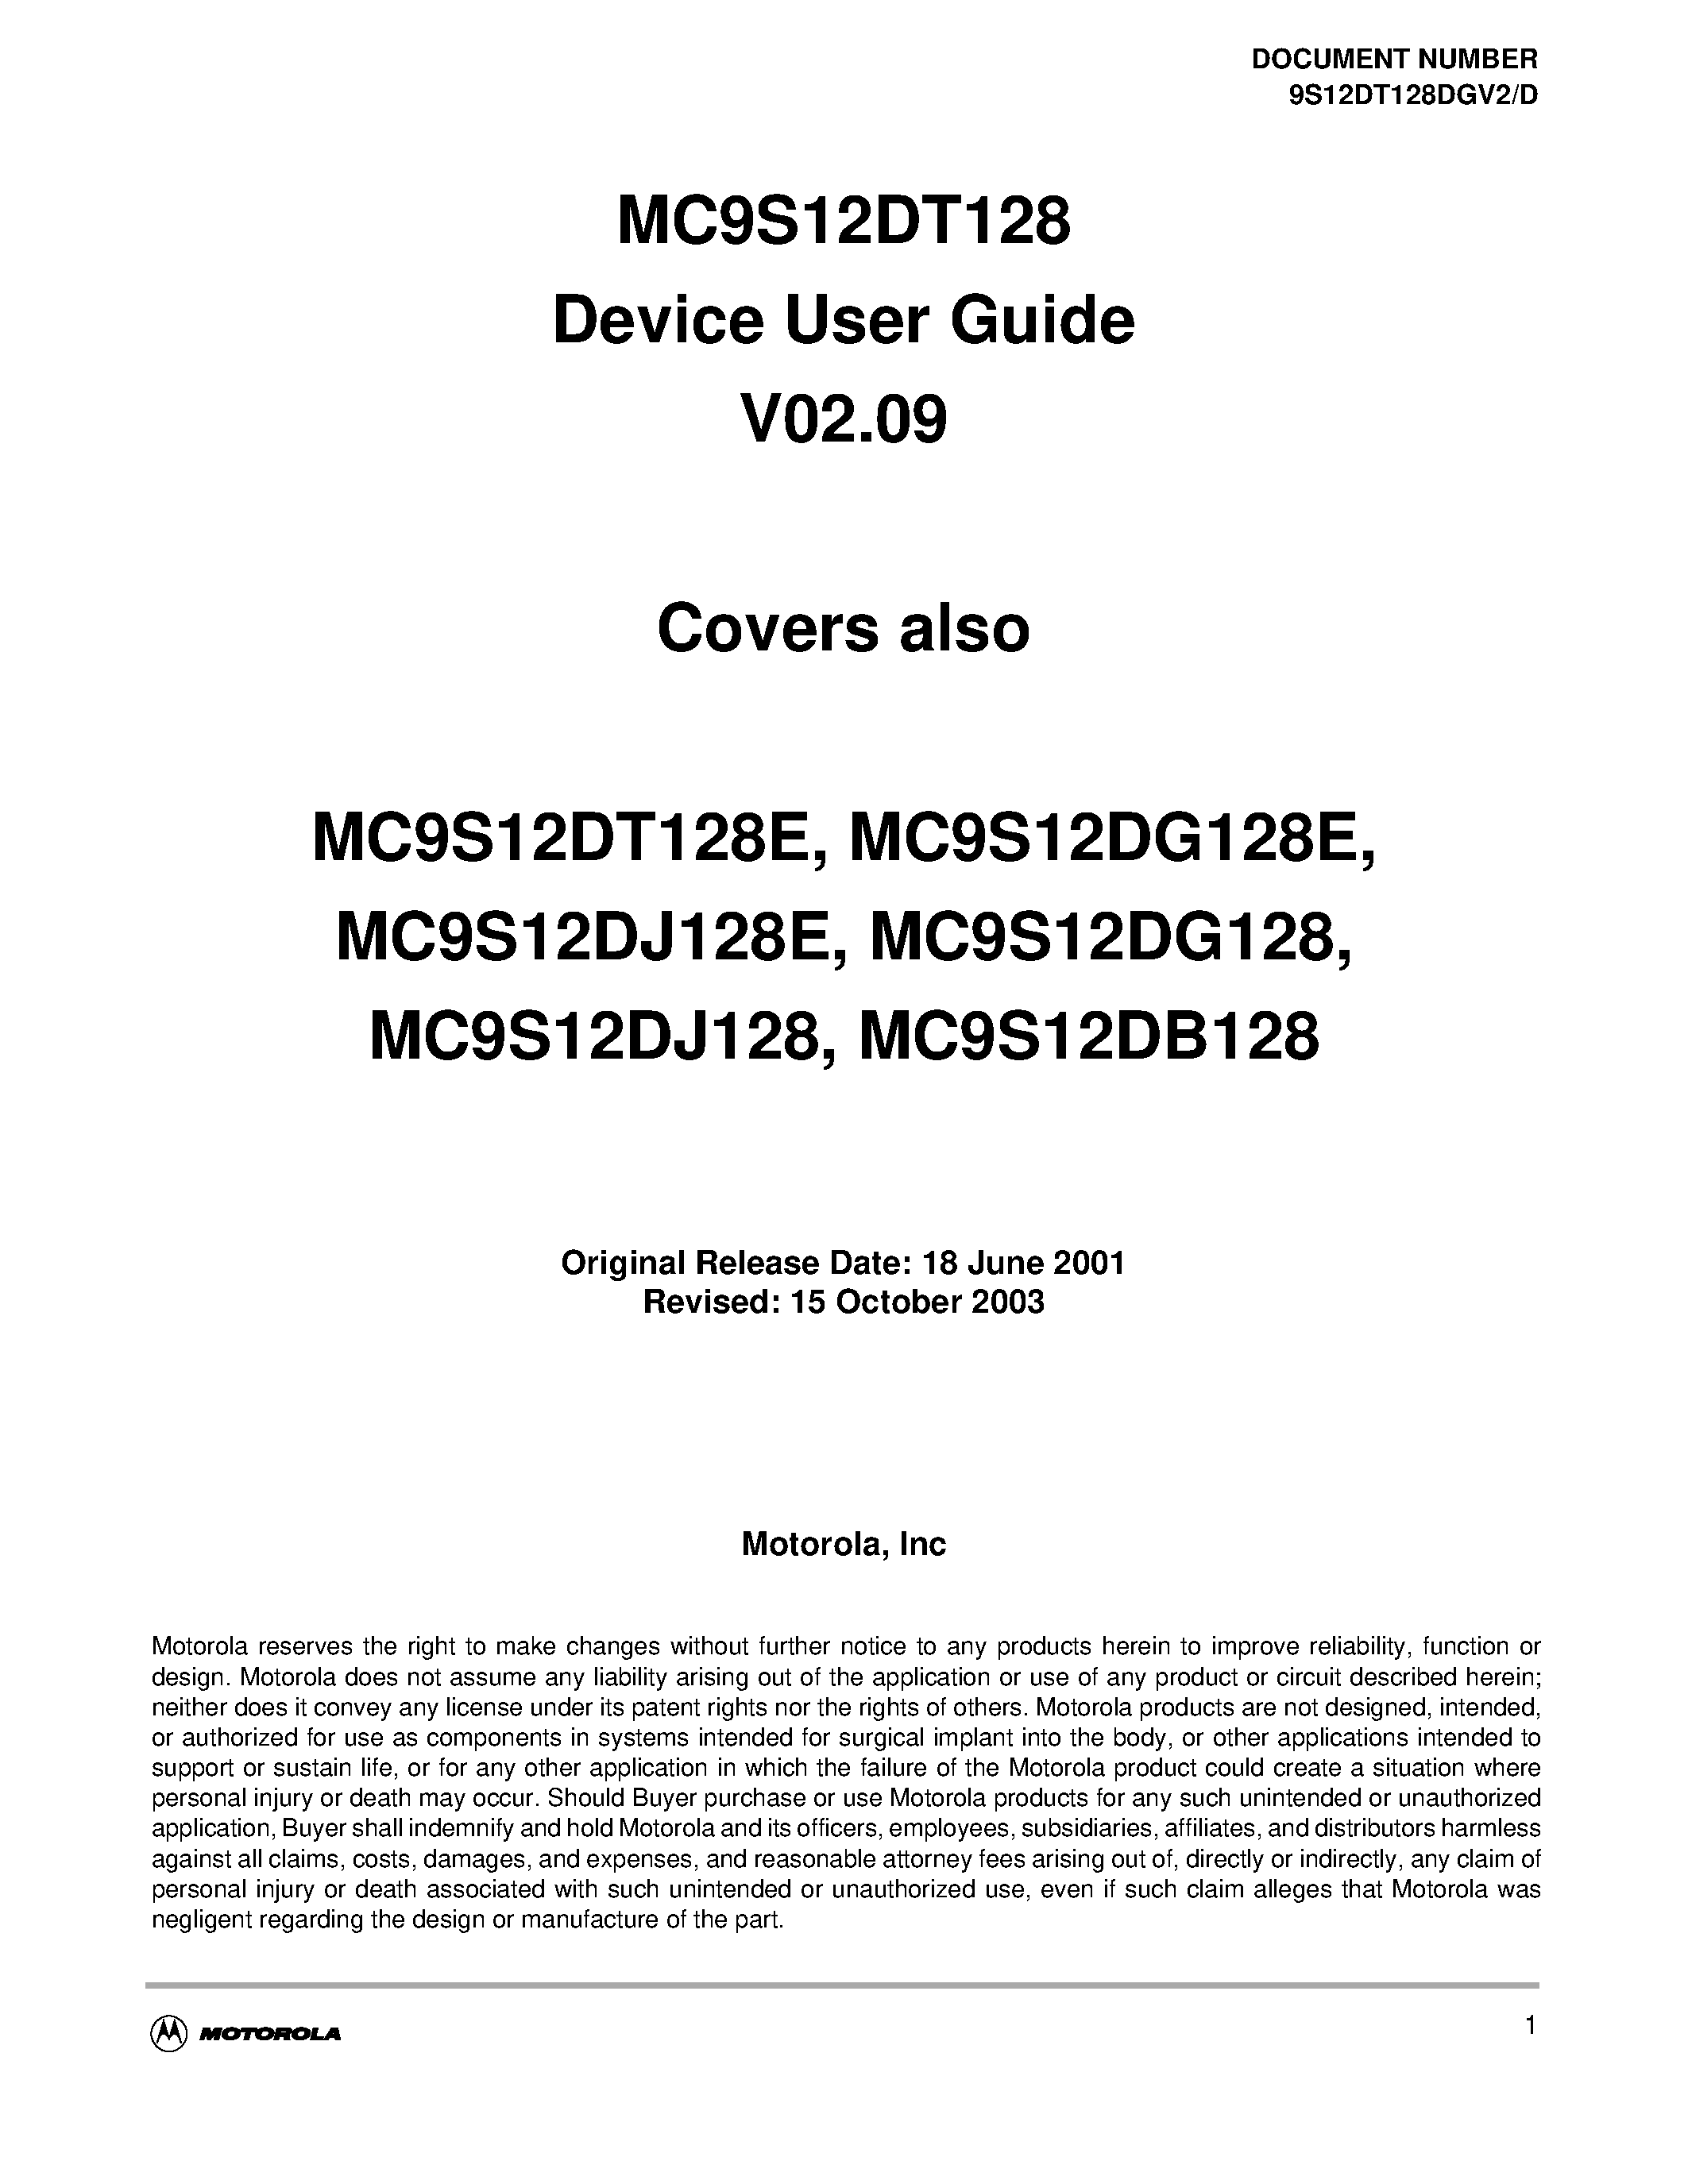 Даташит S12IICV2 - MC9S12DT128 Device User Guide V02.09 страница 1